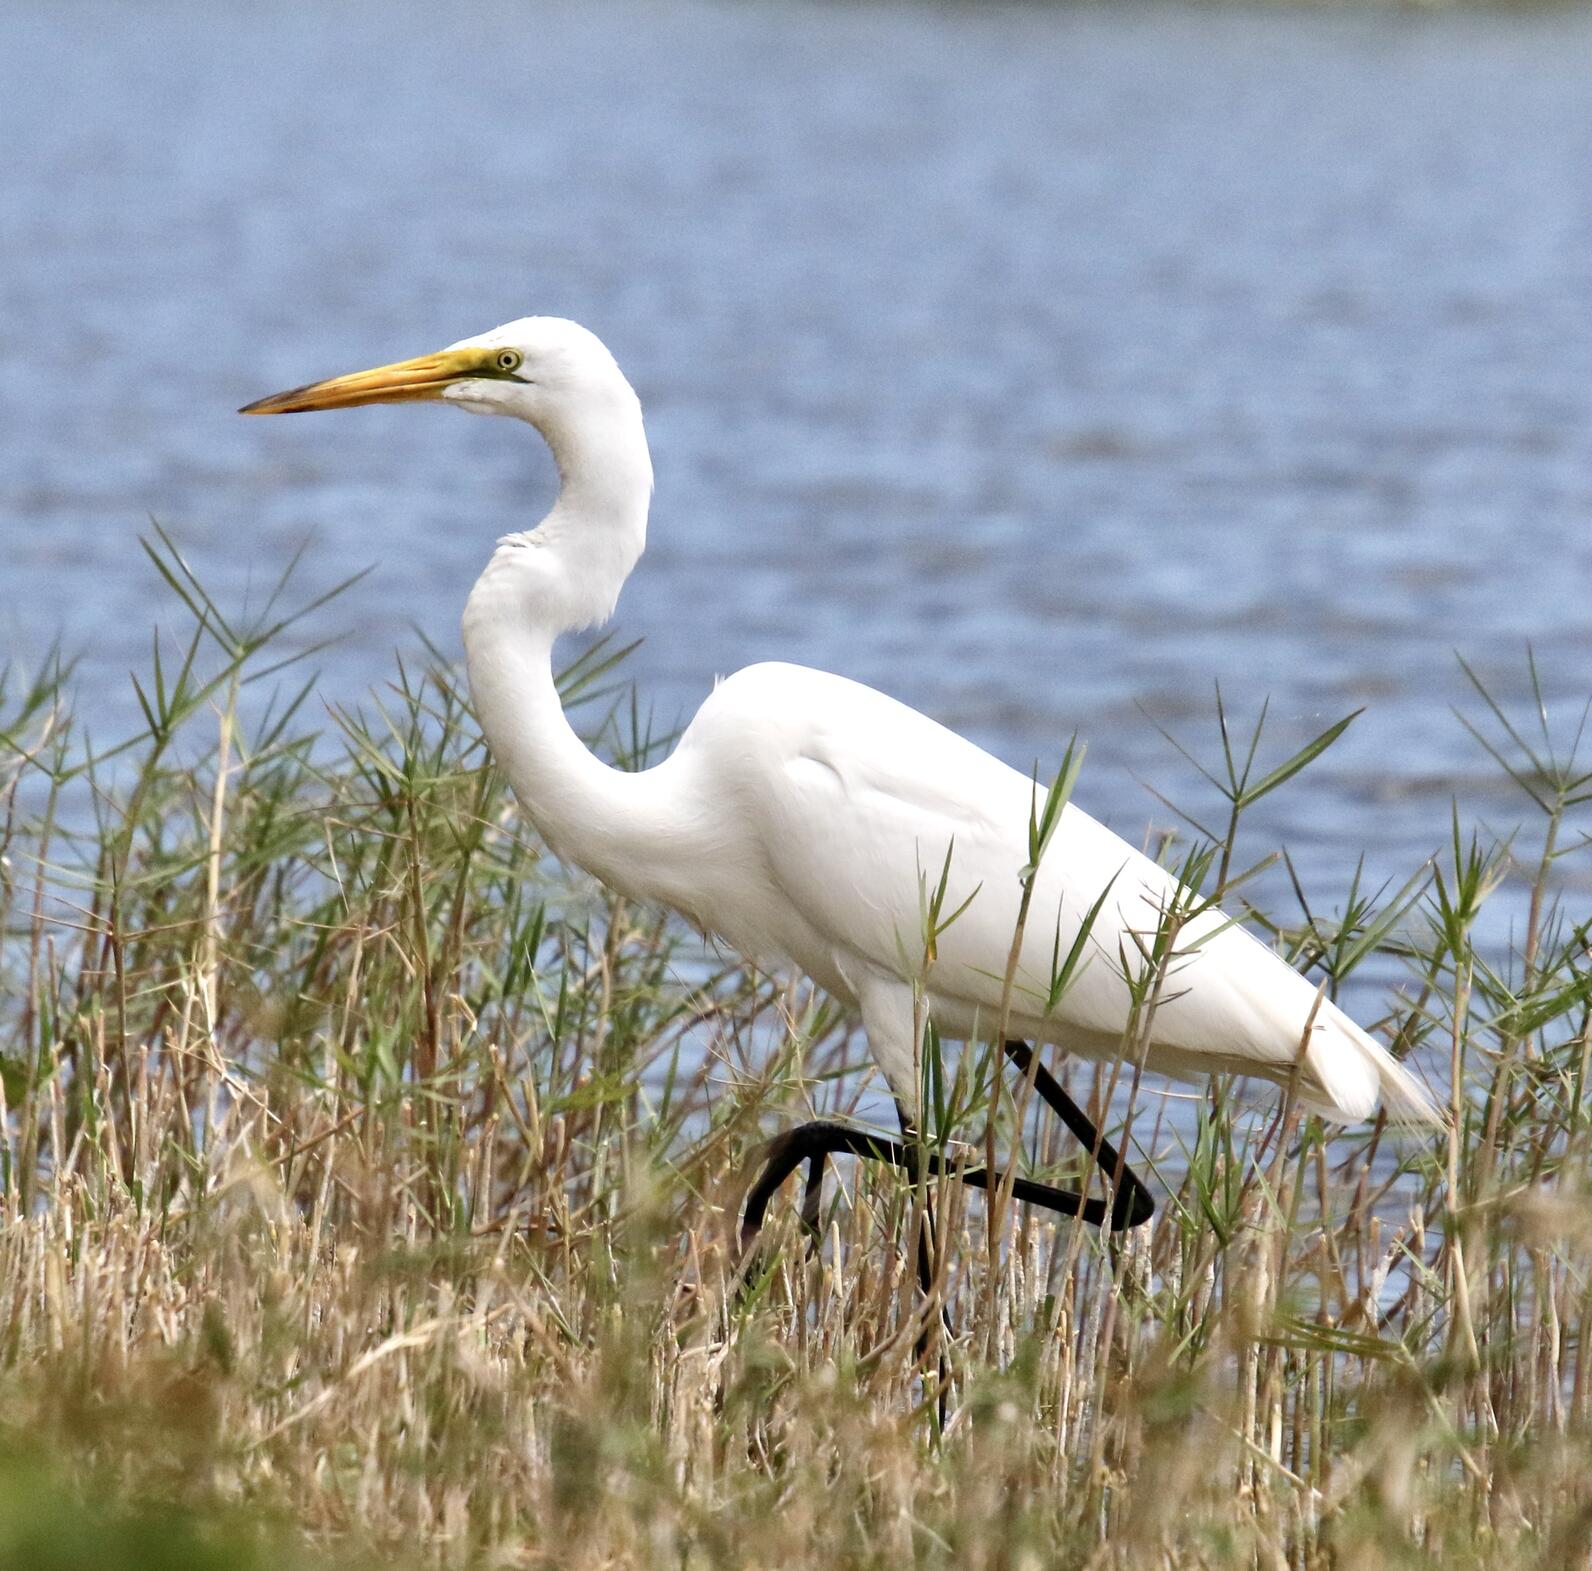 A white bird in a wetland